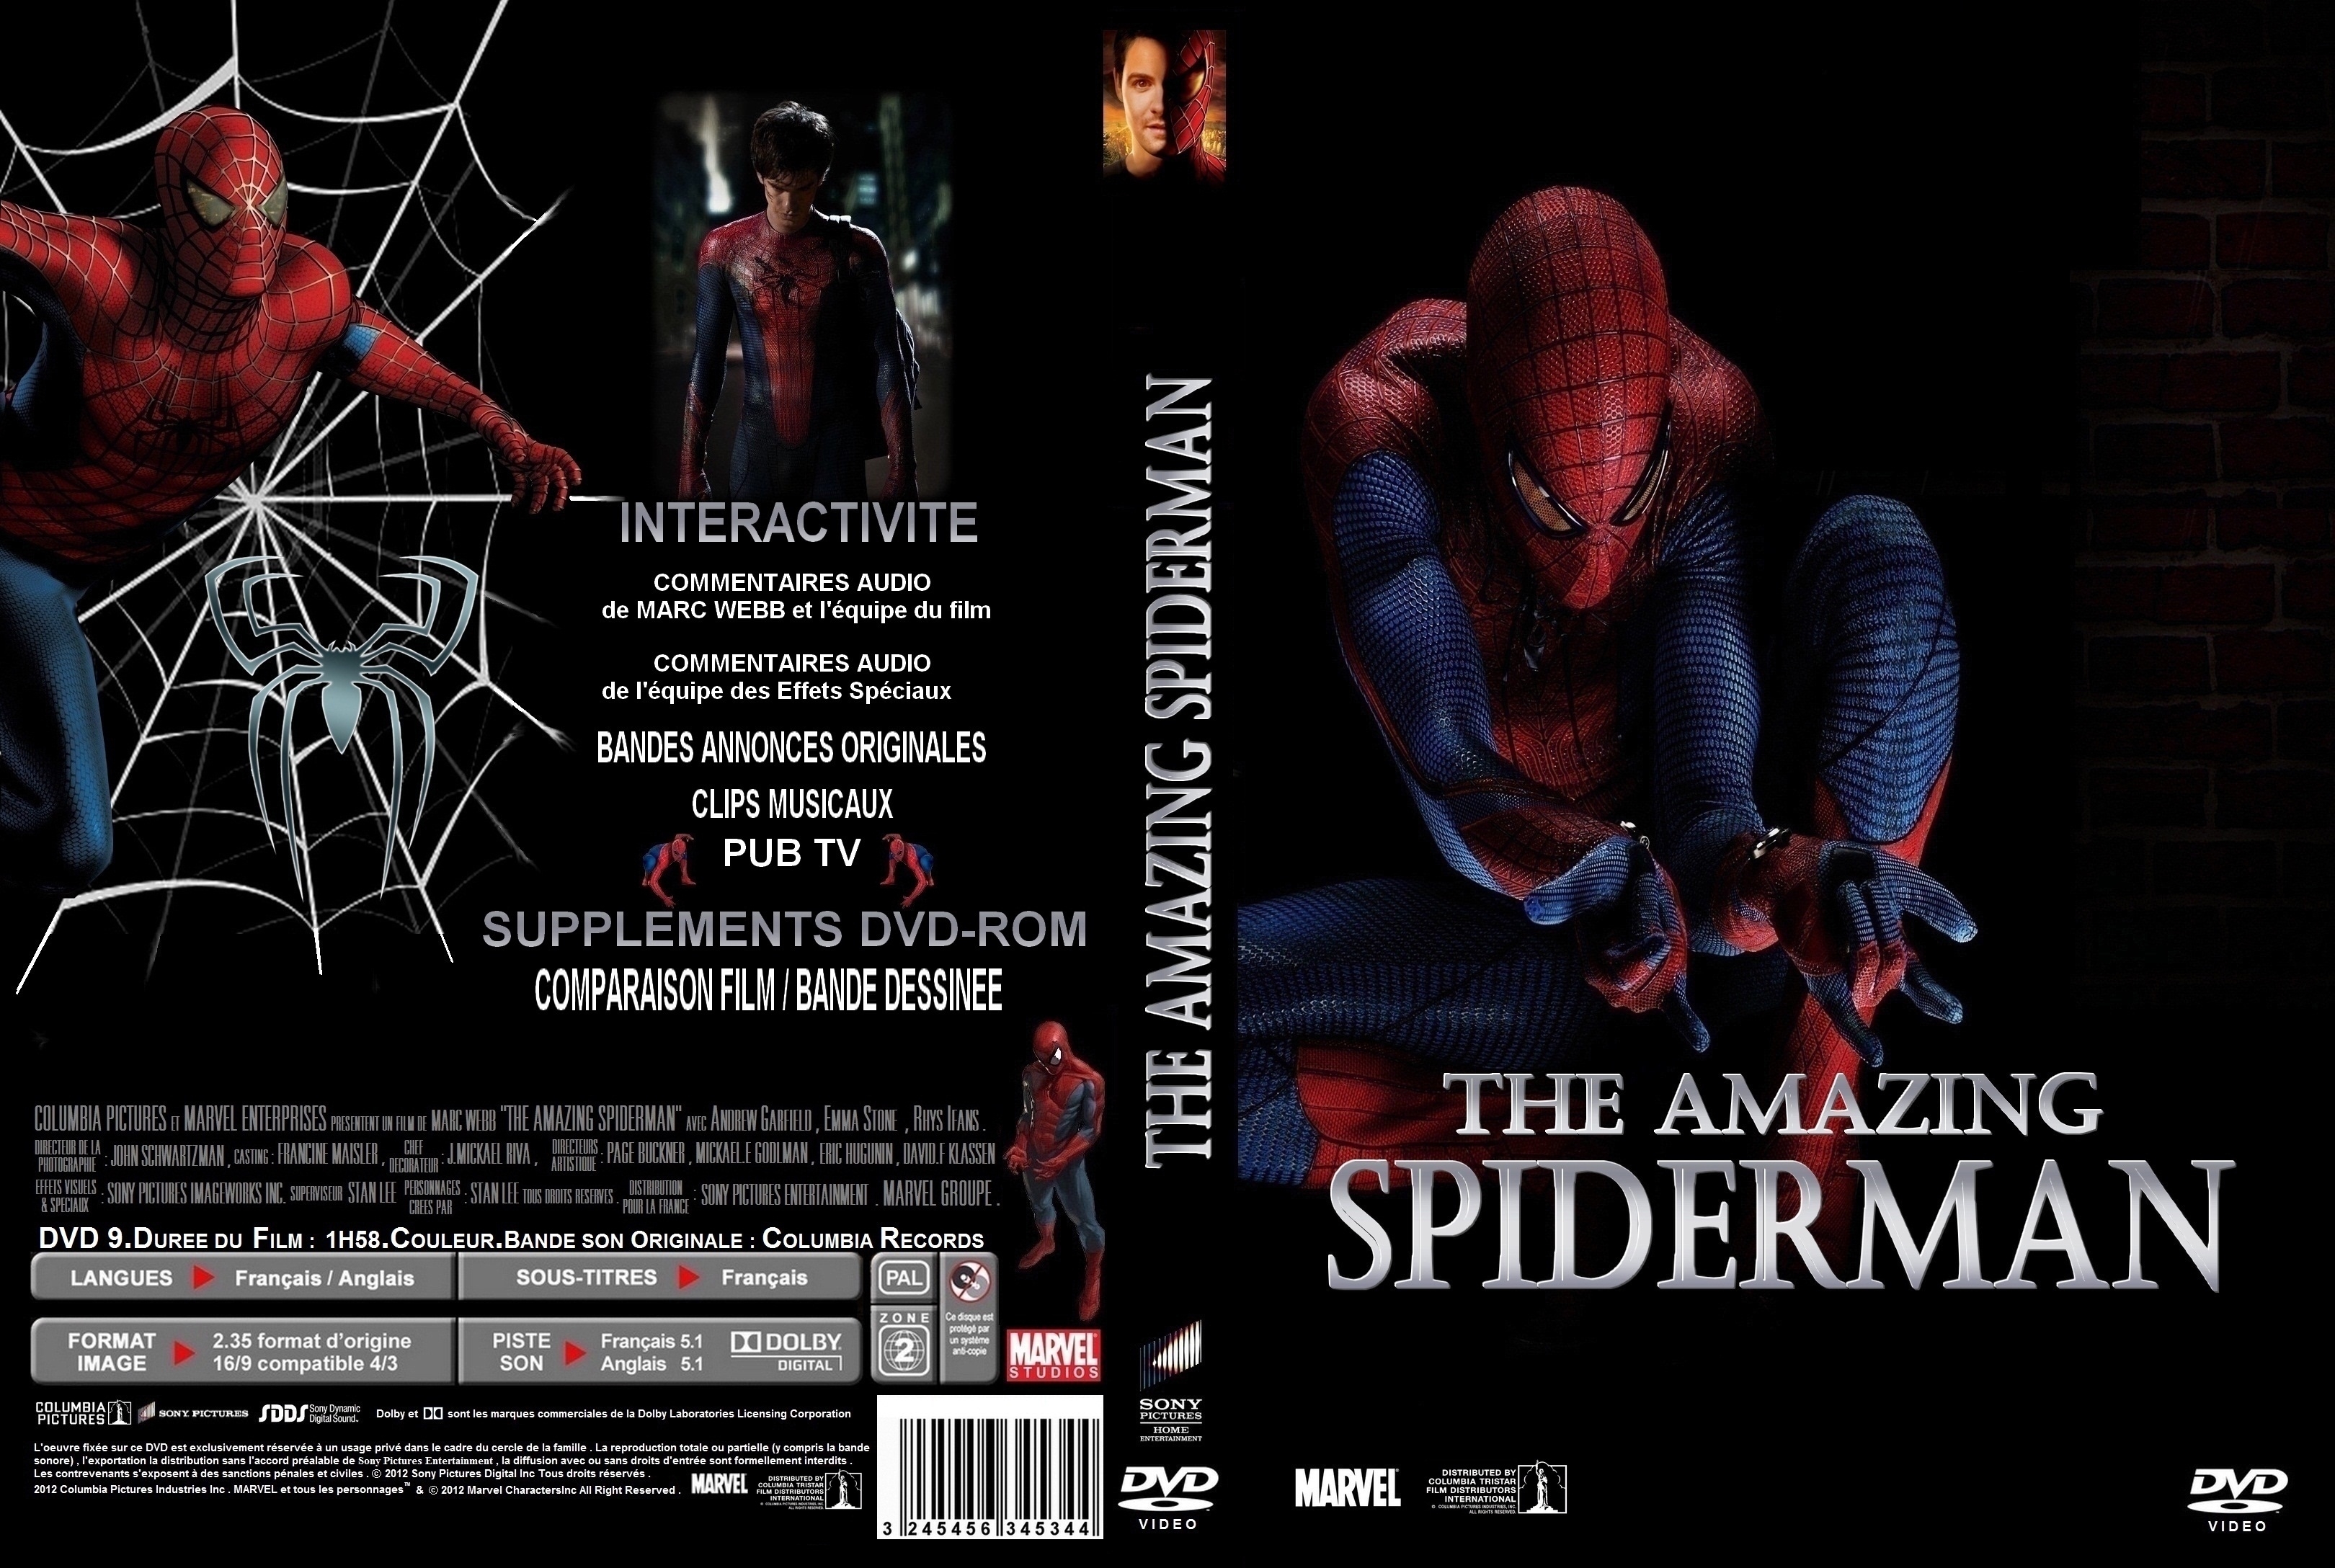 Jaquette DVD The Amazing Spider-Man custom